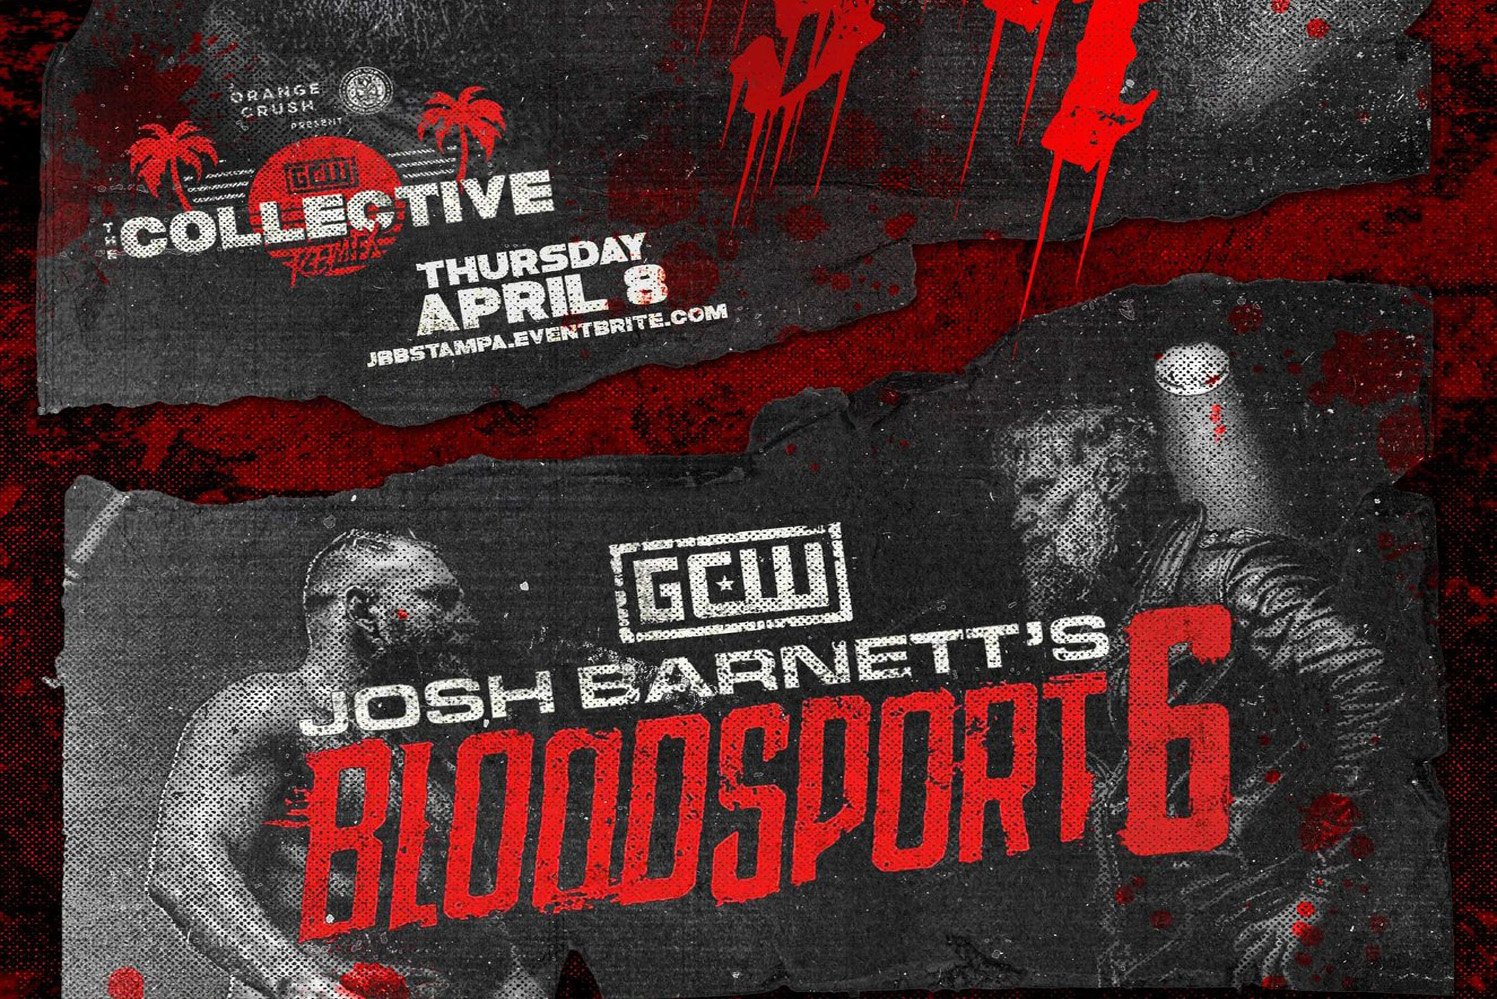 Análisis Josh Barnett's Bloodsport 6